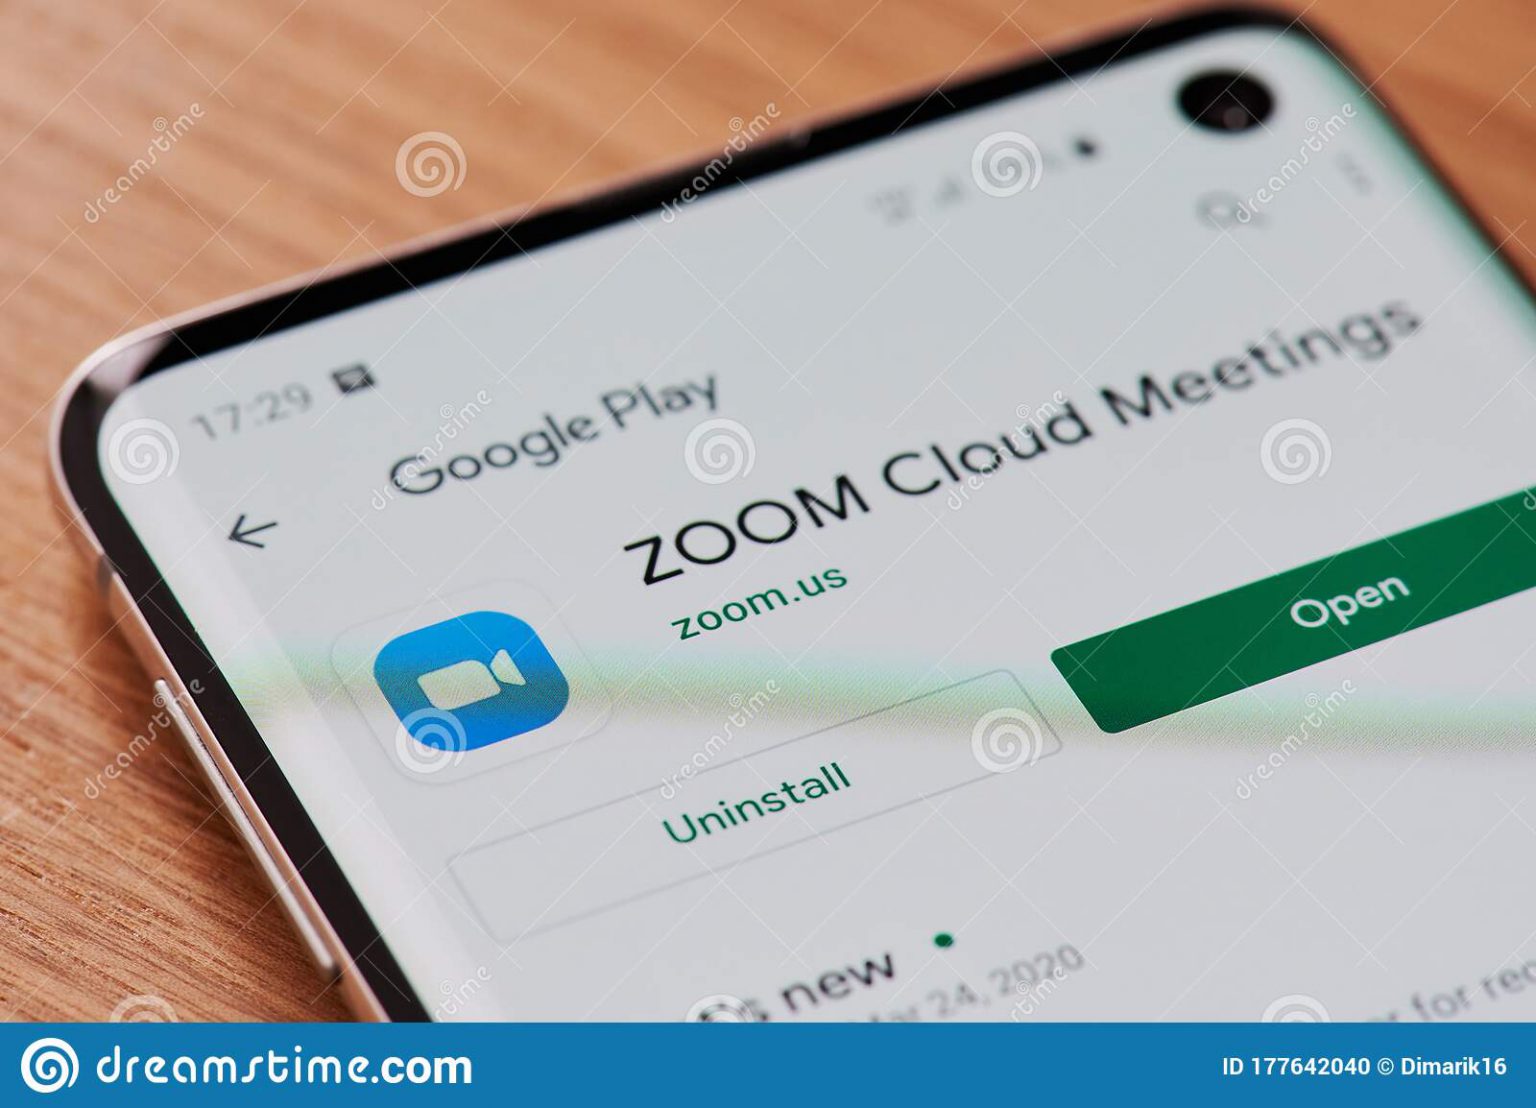 zoom cloud meeting app free download for laptop